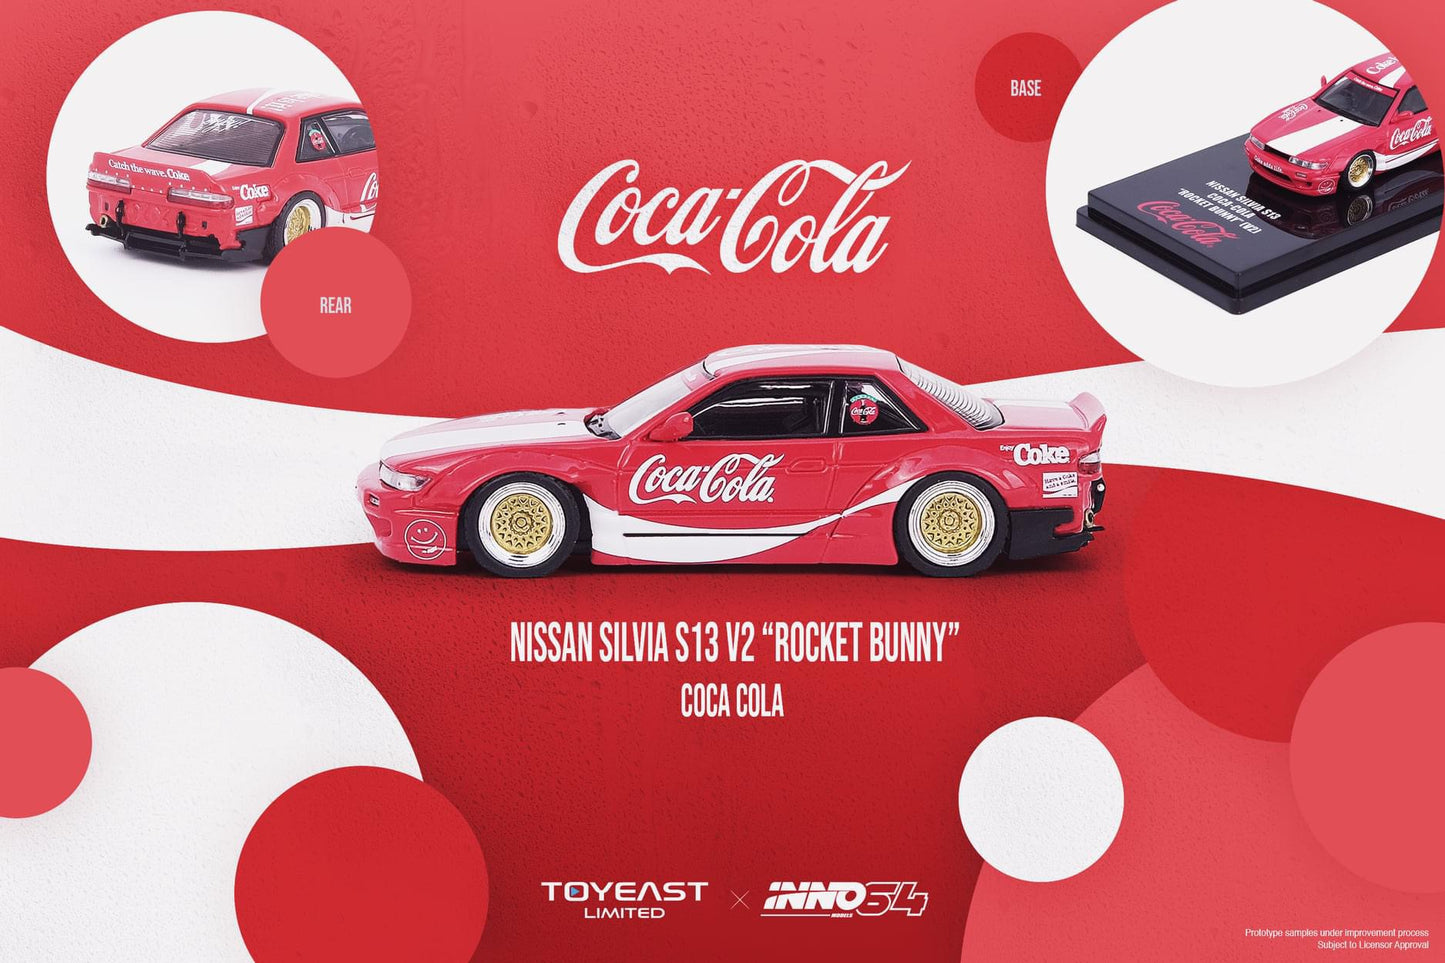 Inno64 X ToyEast Hong Kong 1:64 Nissan Silvia S13 Rocket Bunny - Coca Cola